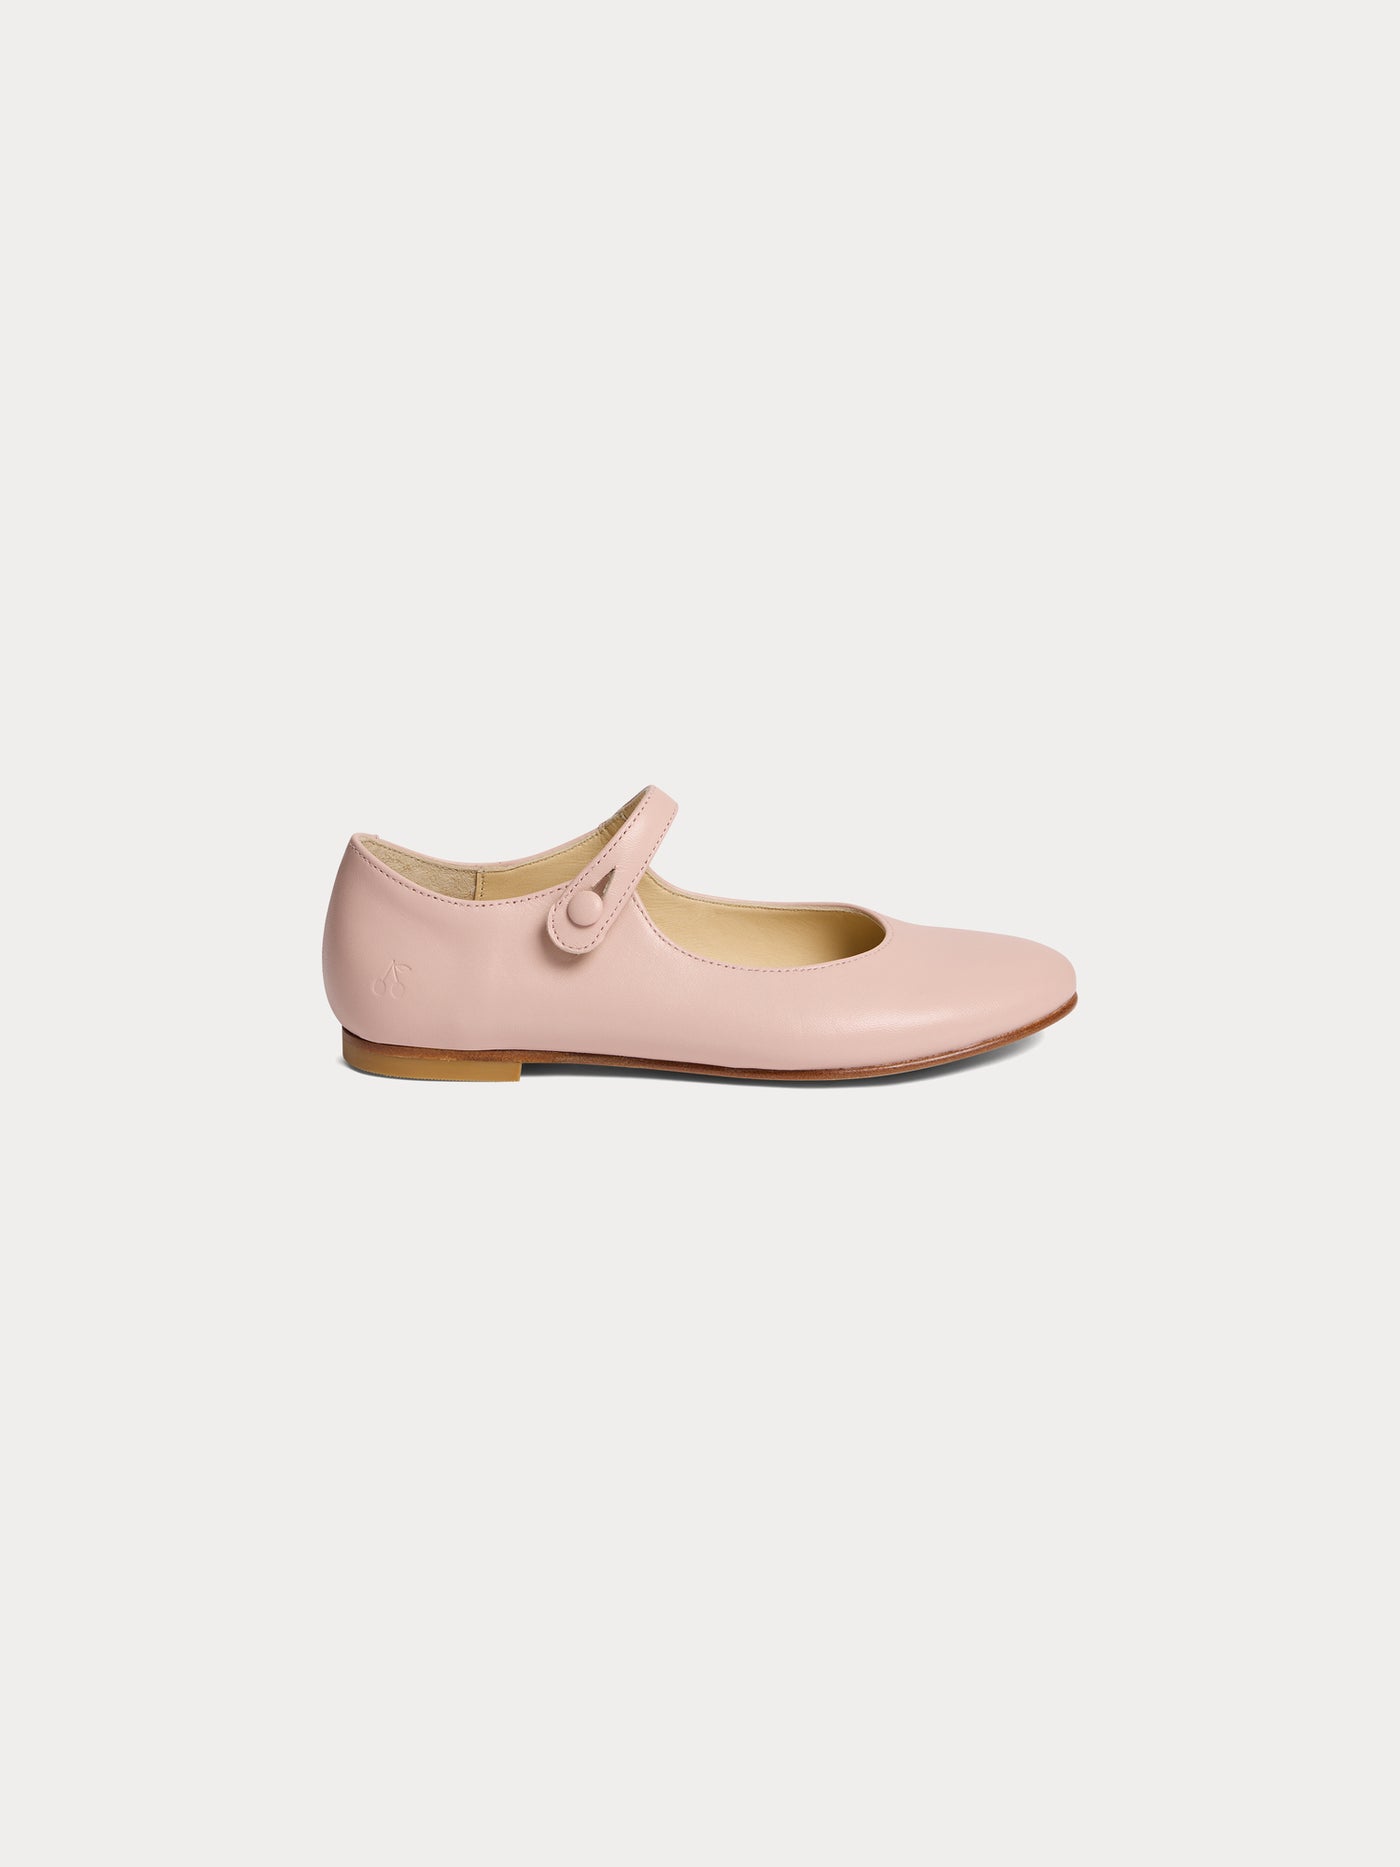 Ella Mary Janes Schuhe pink blush